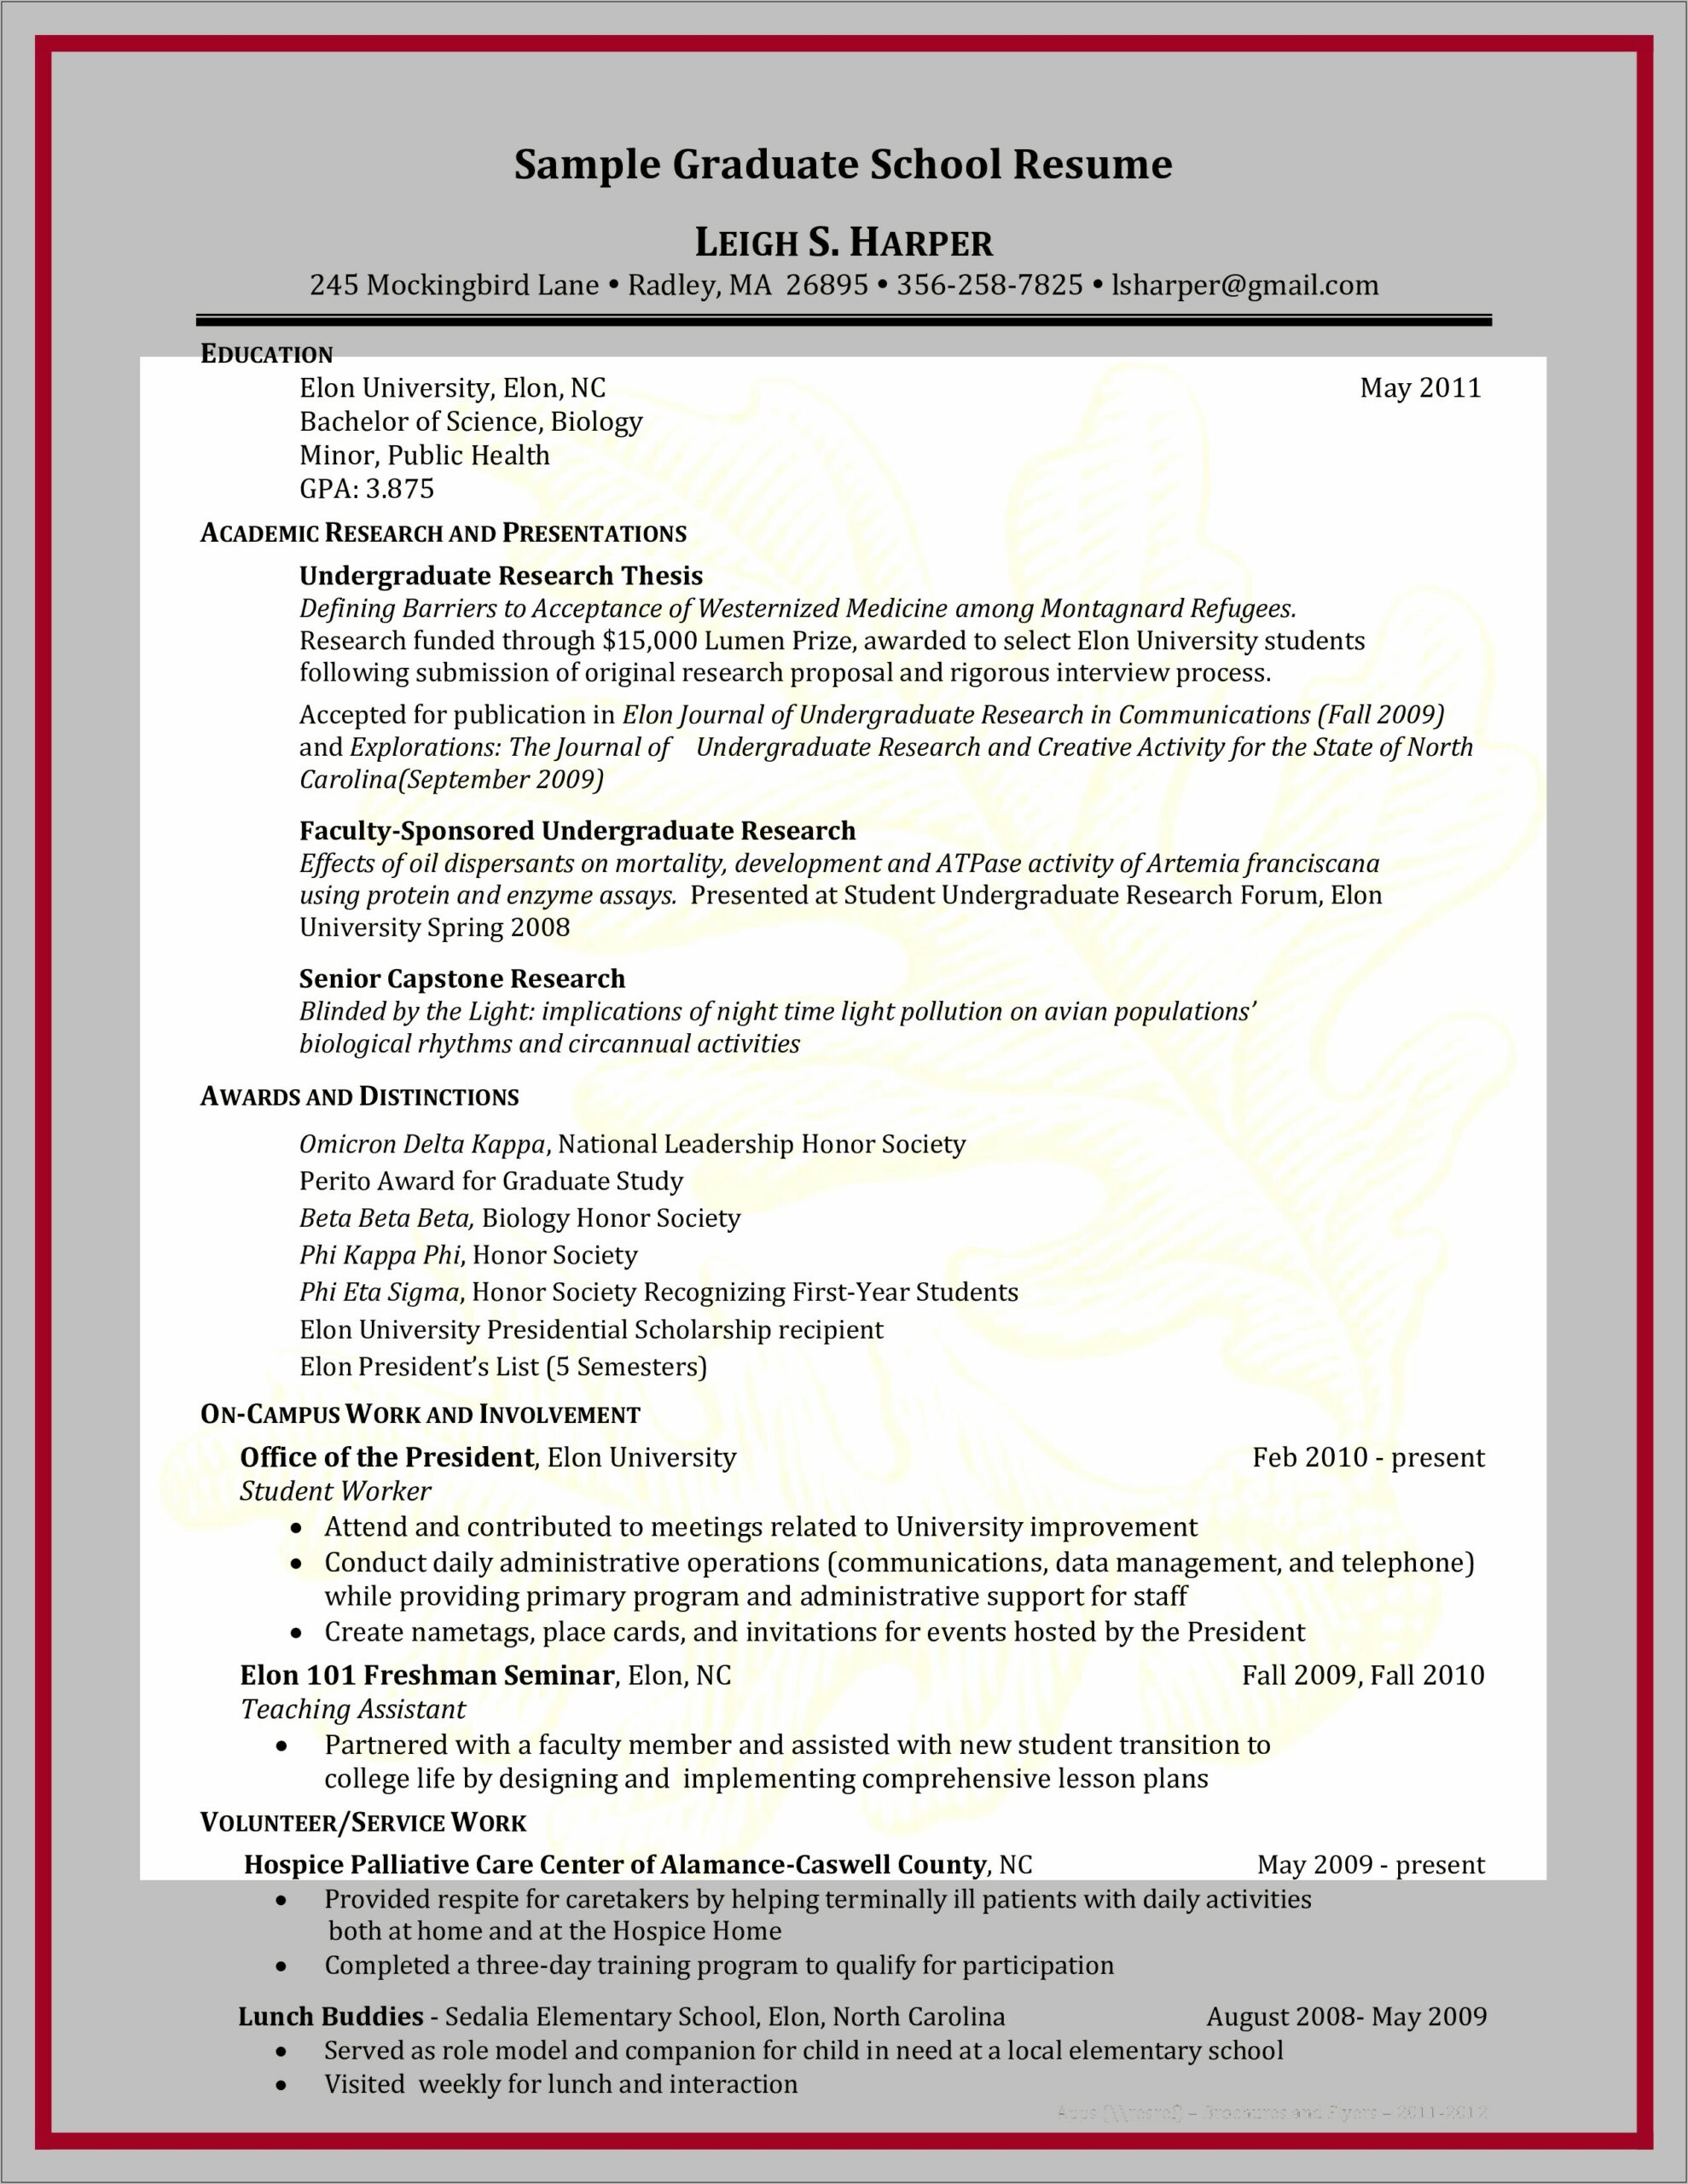 Sample Academic Resume For Graduate School